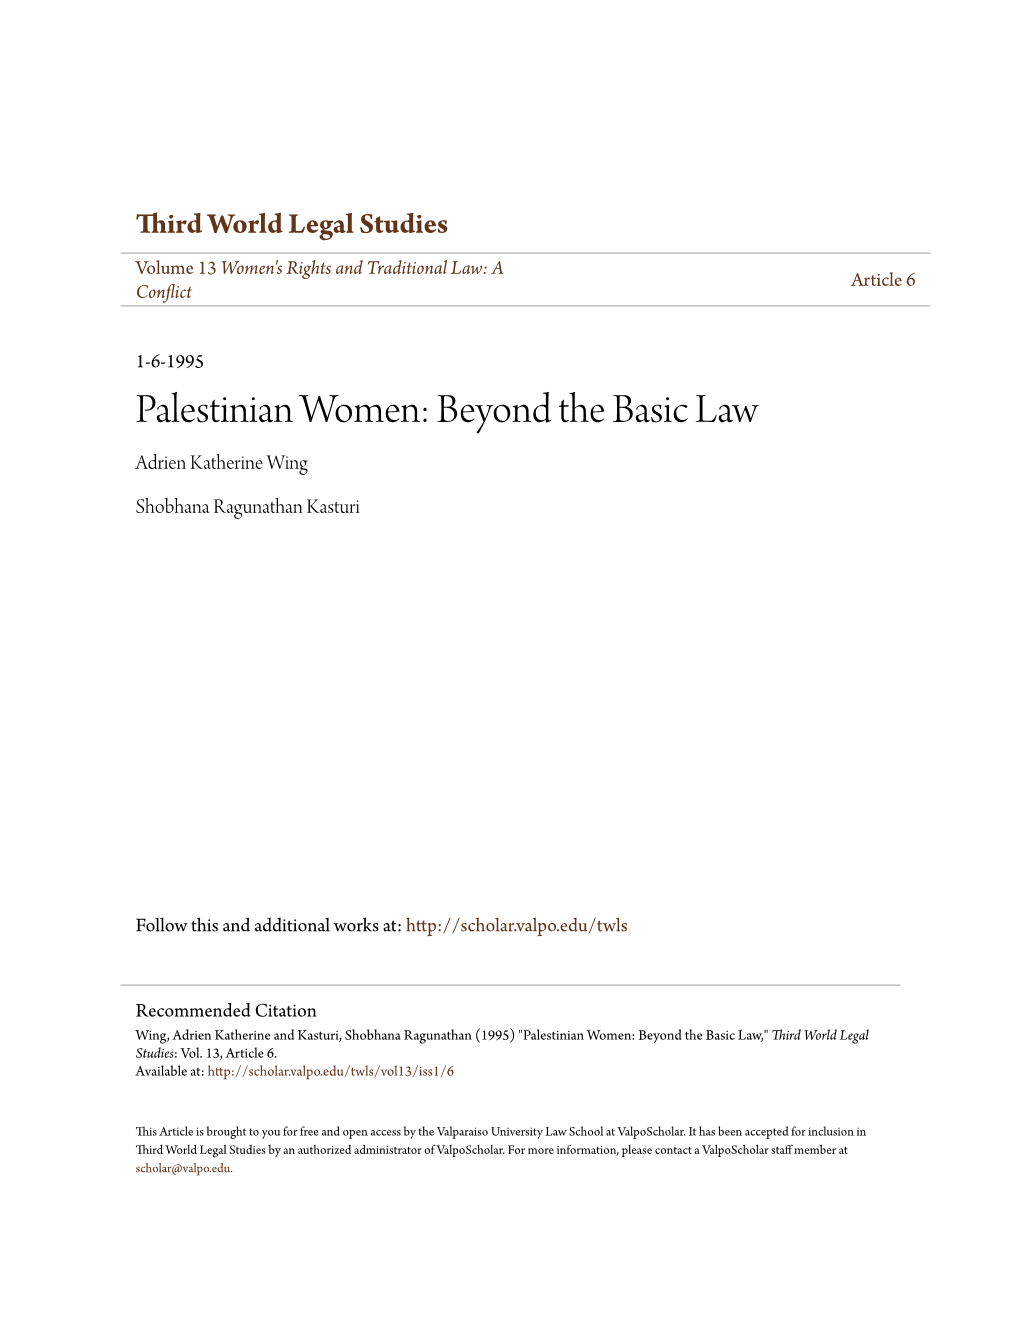 Palestinian Women: Beyond the Basic Law Adrien Katherine Wing